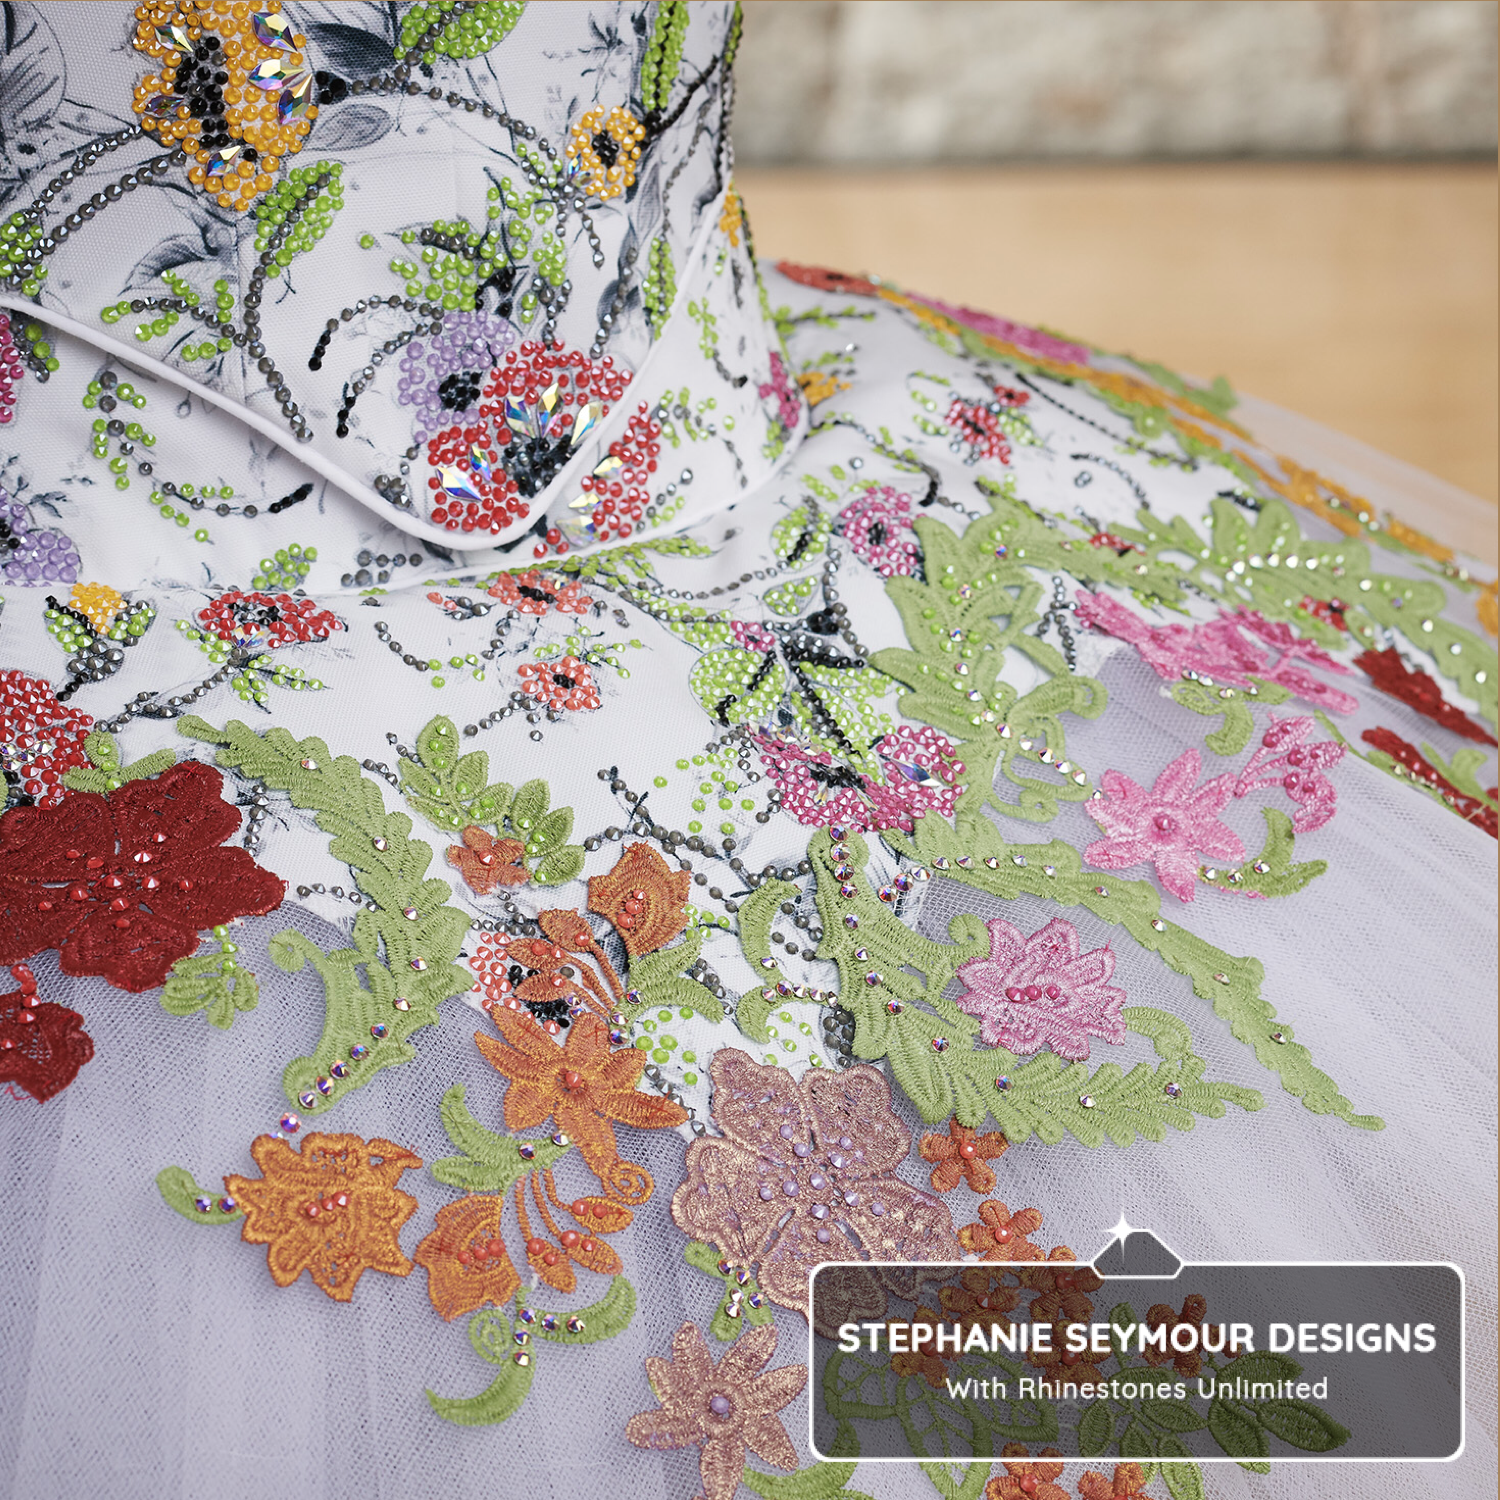 Stephanie Seymour Designs with Rhinestones Unlimited